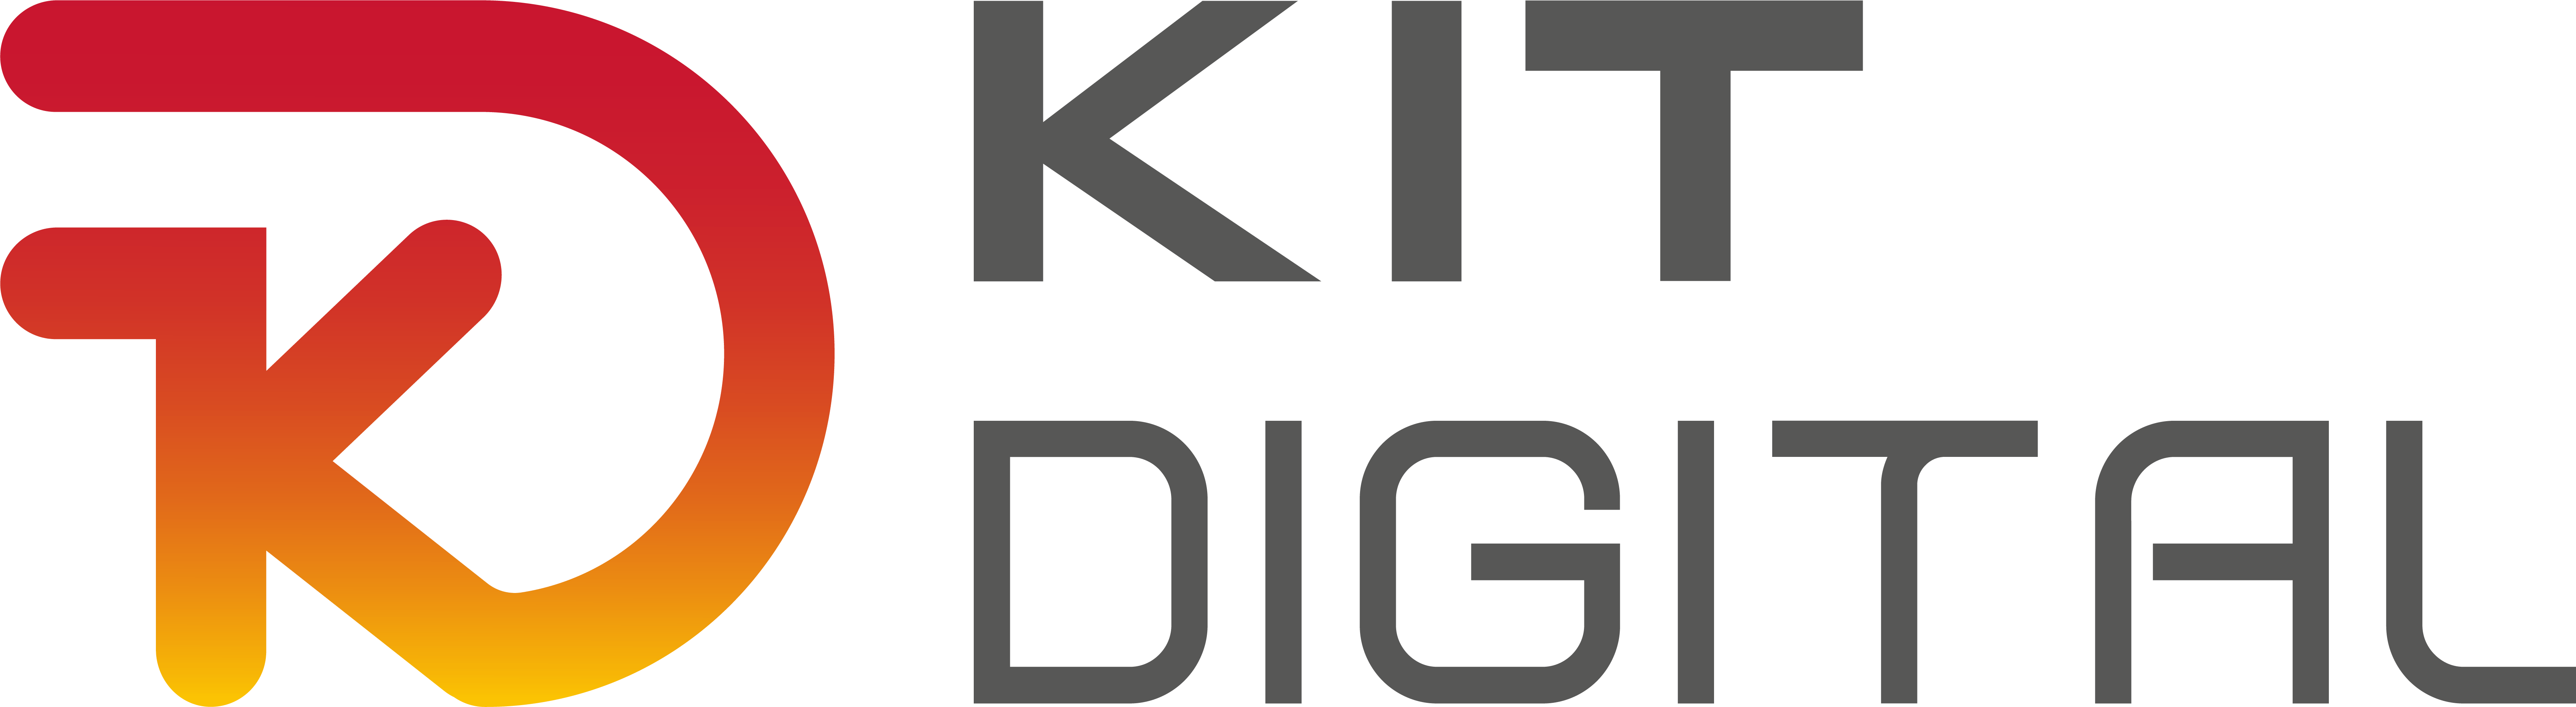 Programa KIT DIGITAL cofinanciado por los fondos Next Generation (EU)